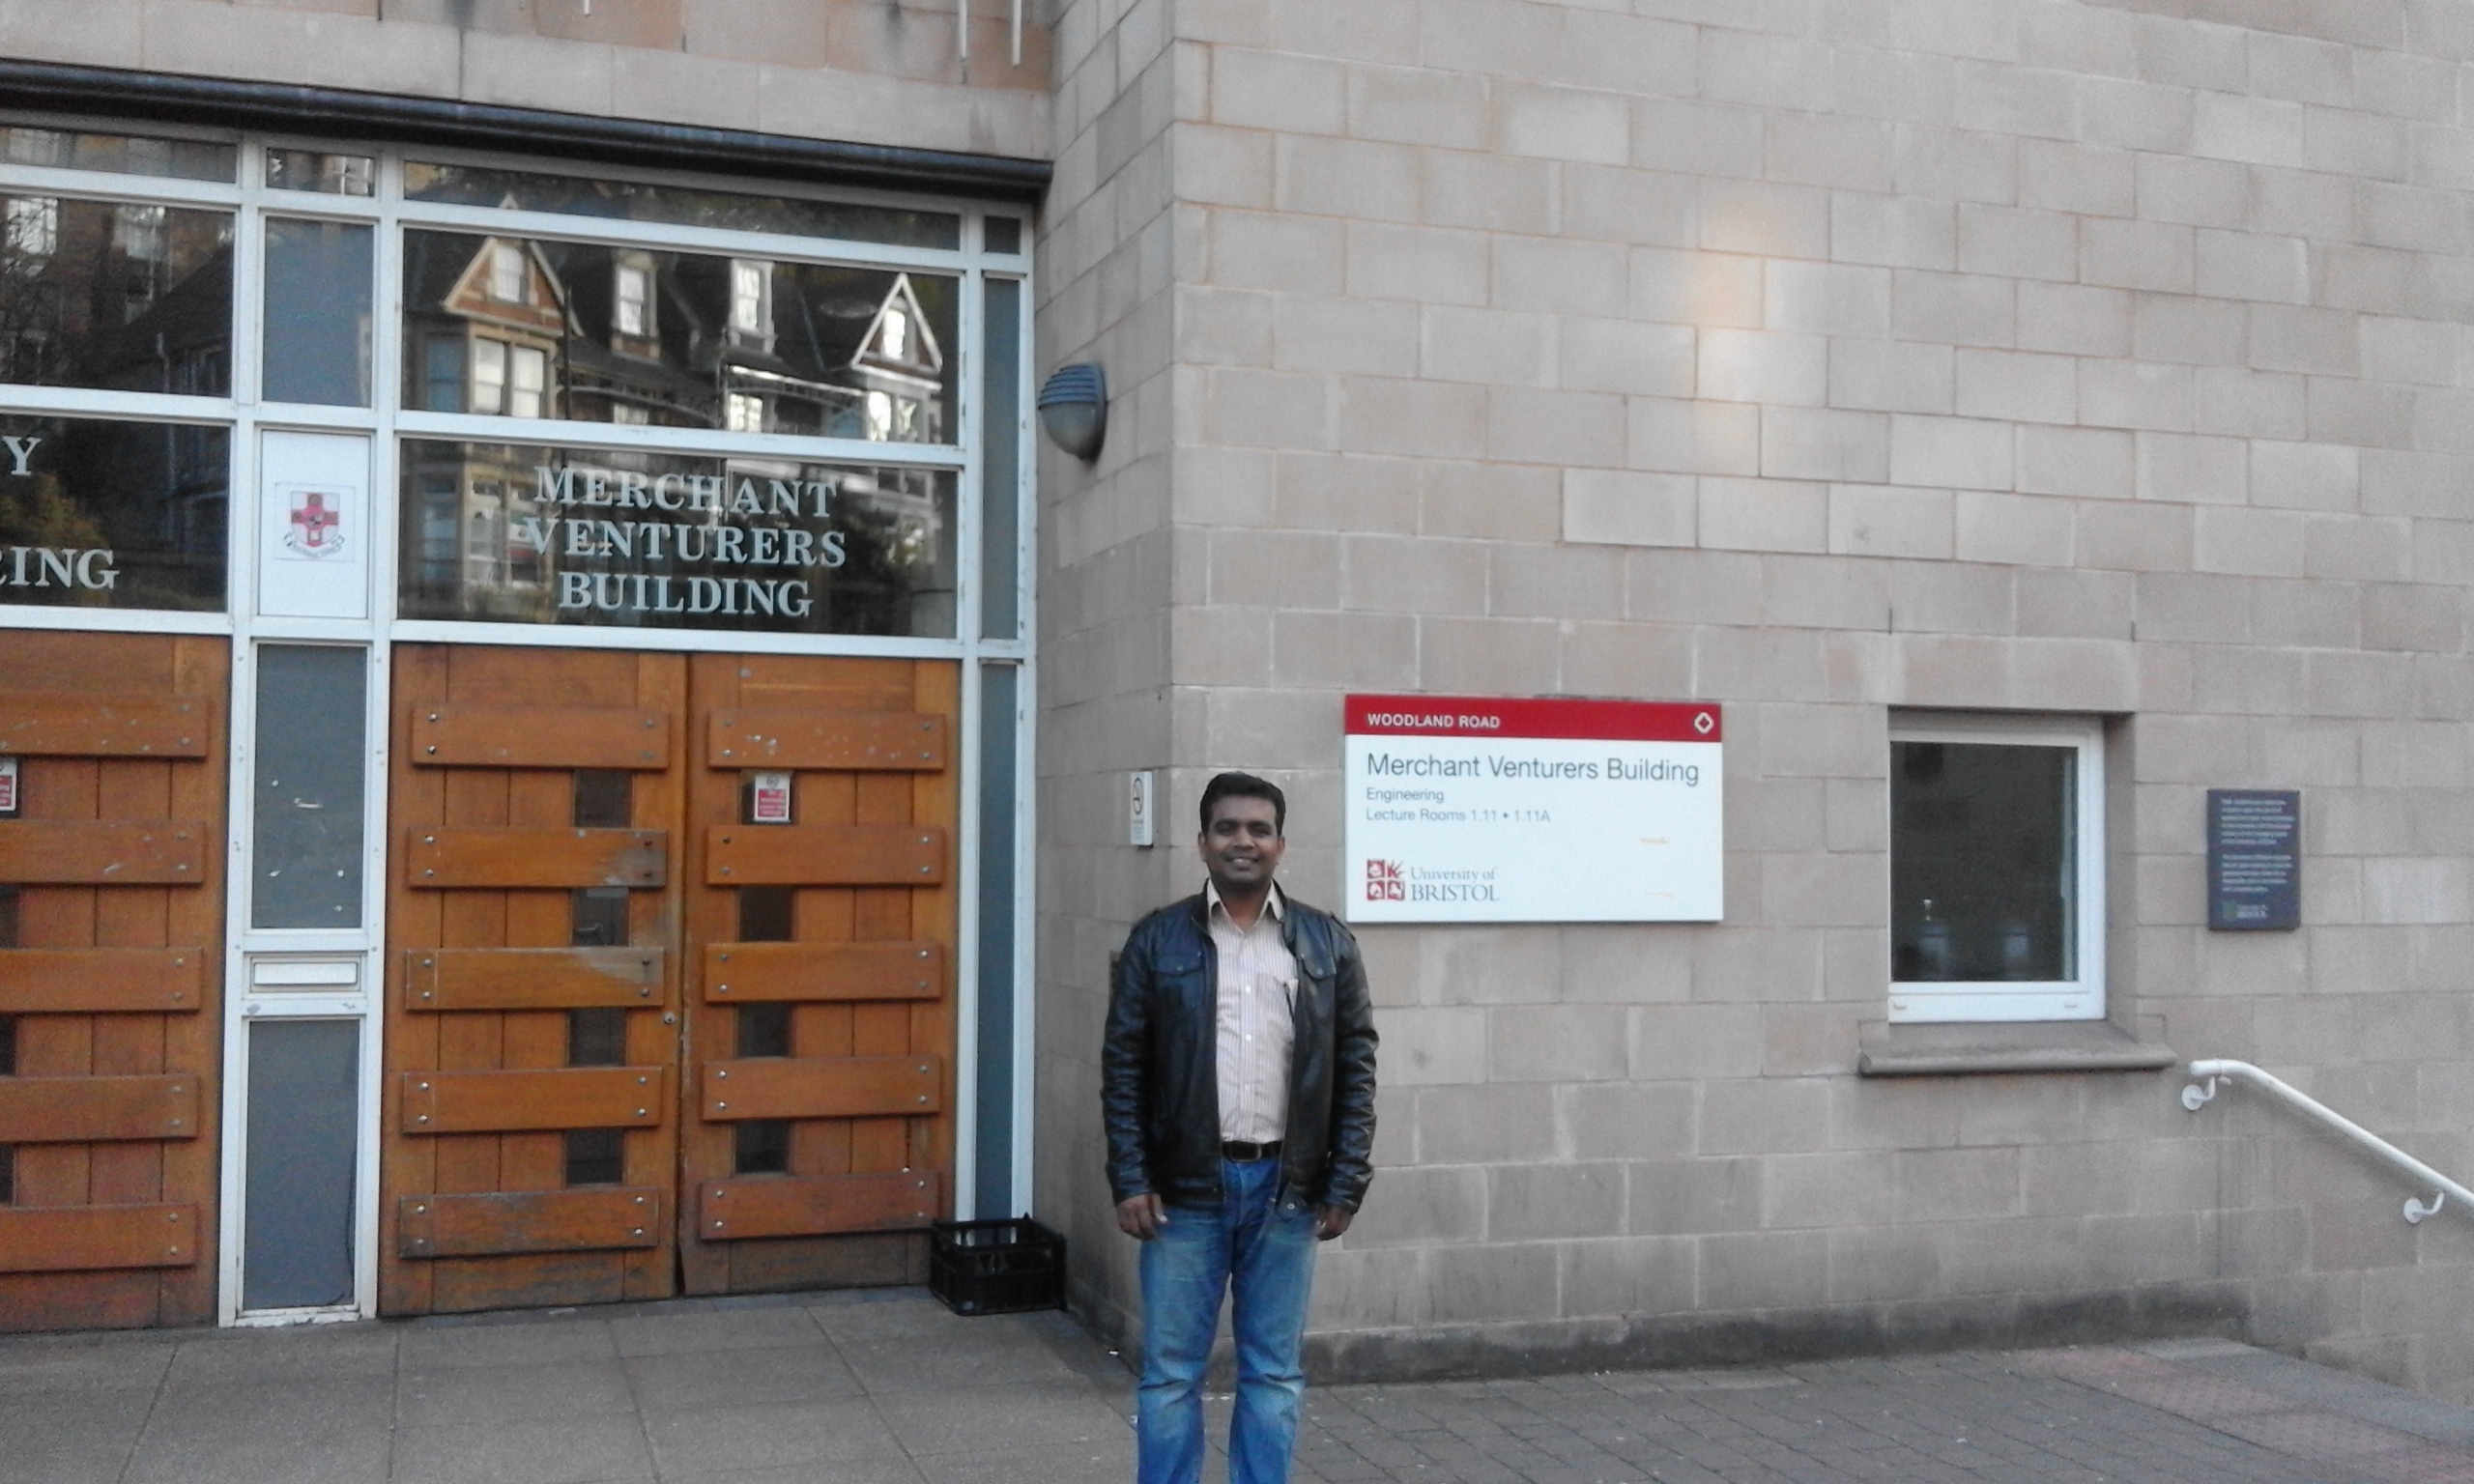 University of Bristol, UK, 2015